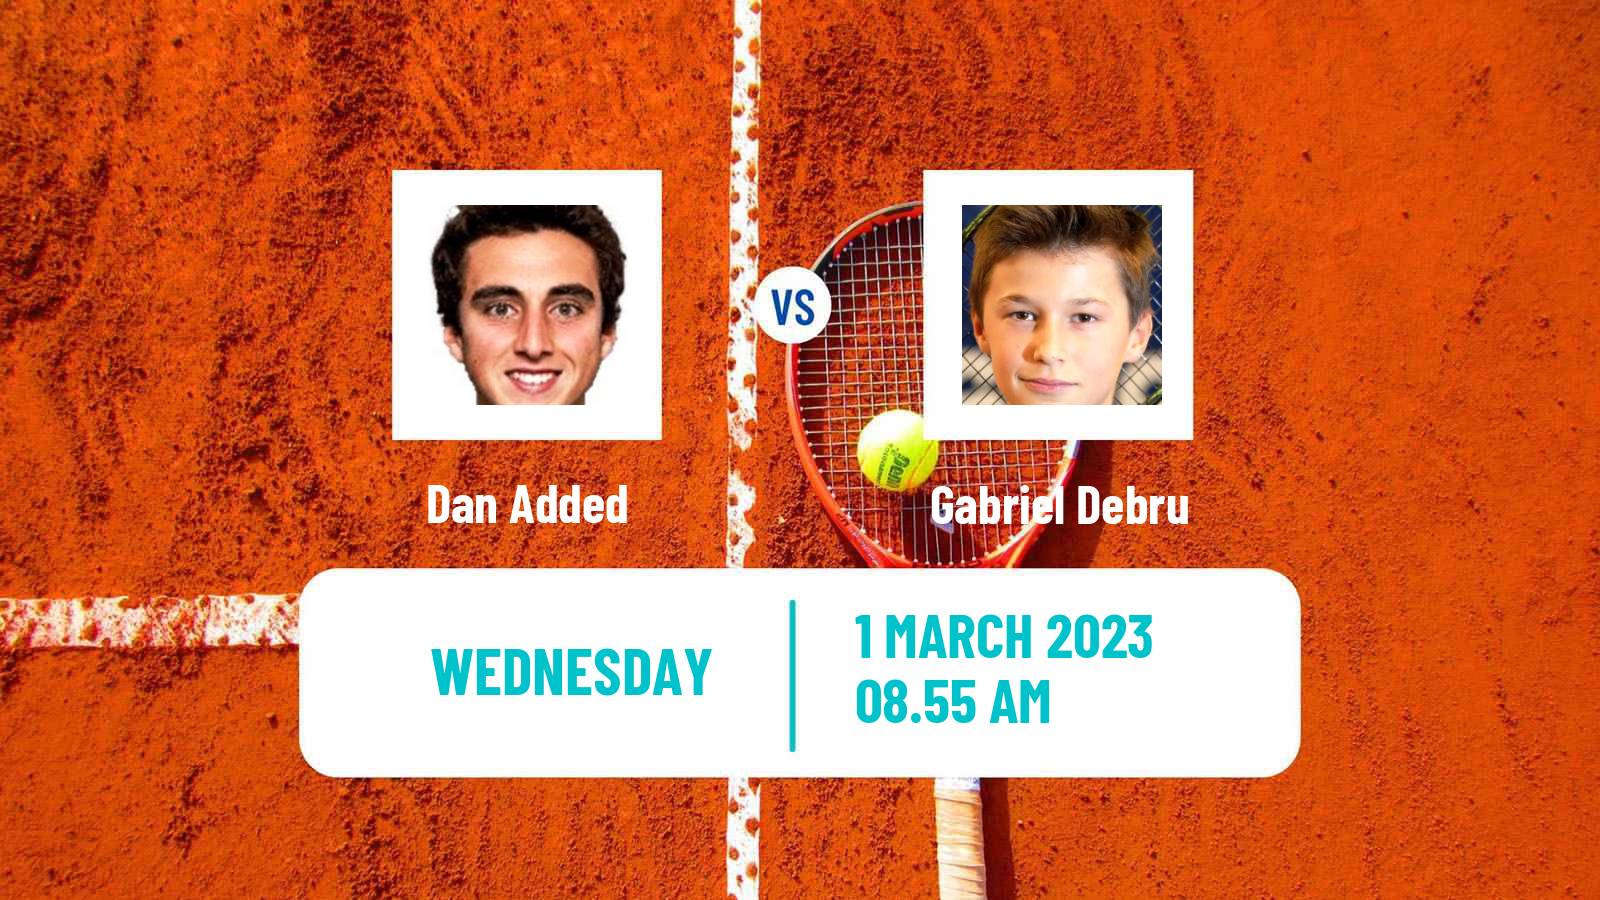 Tennis ATP Challenger Dan Added - Gabriel Debru